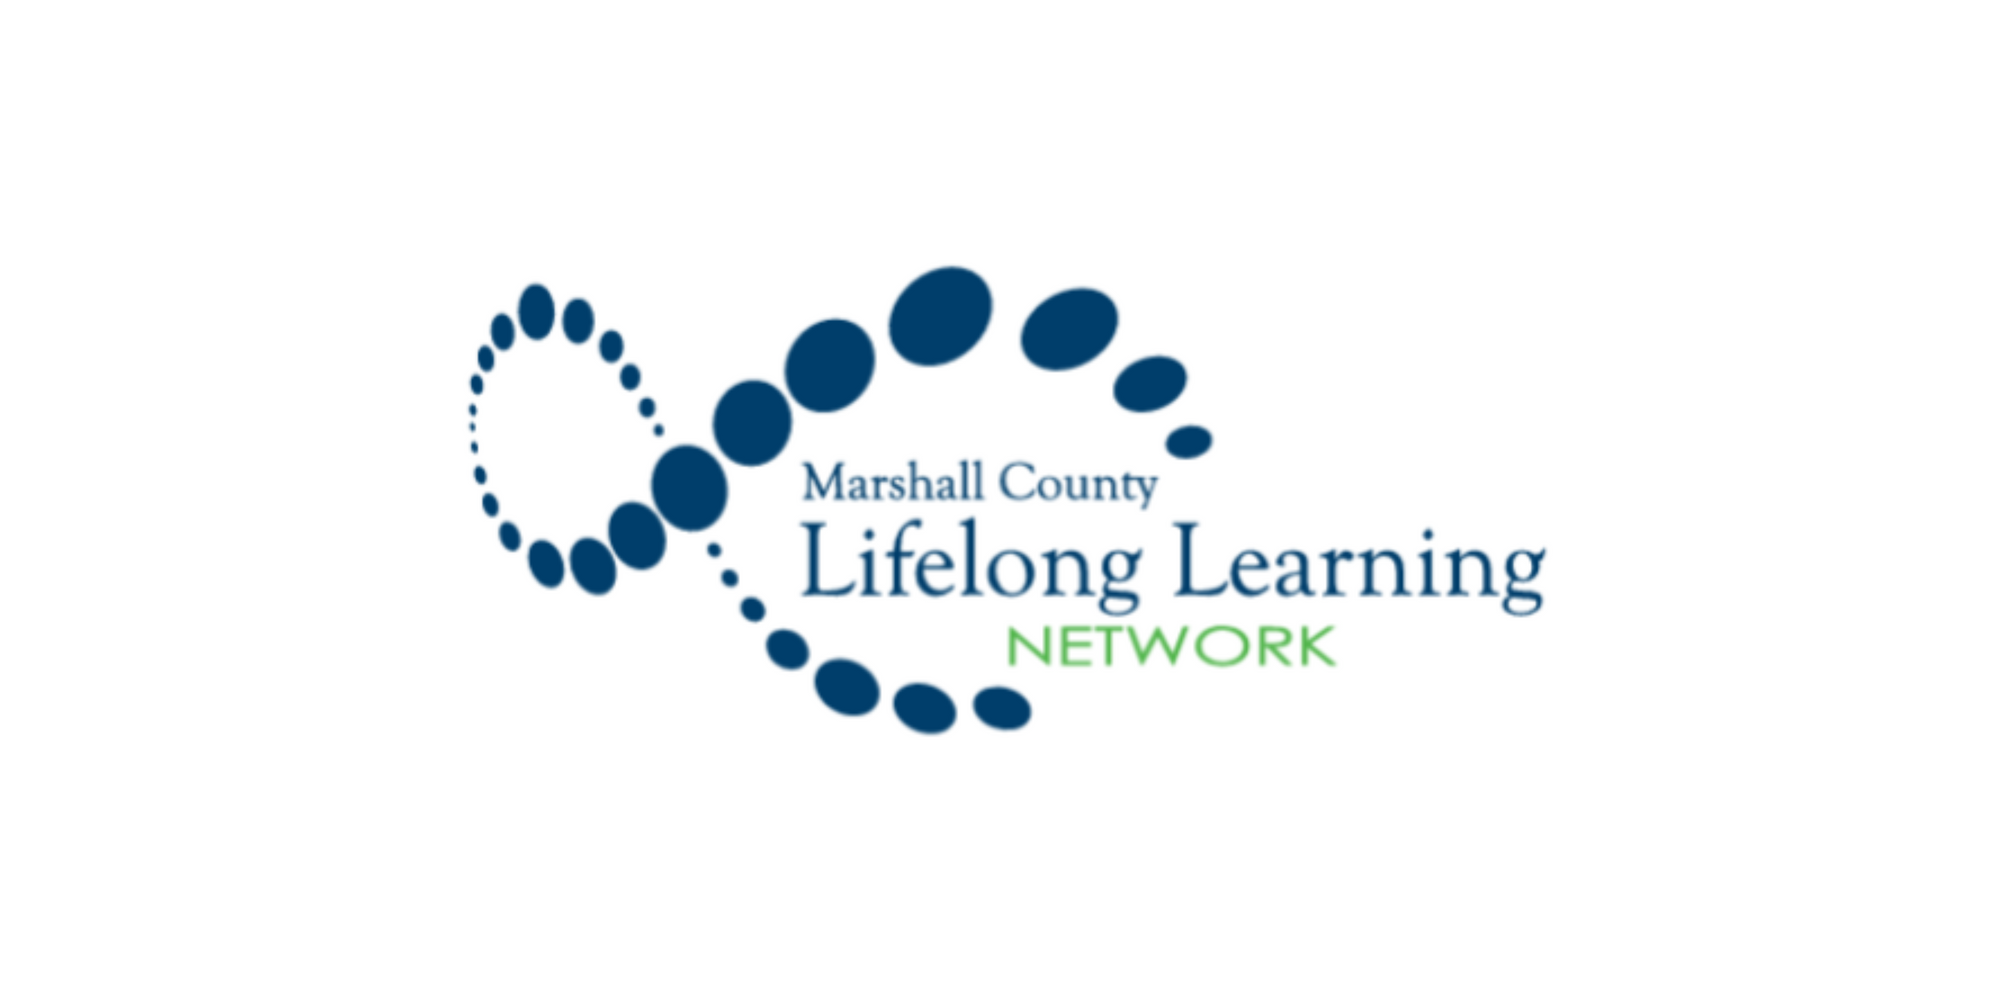 Marshall County Lifelong Learning Network, MC LLN: Creating a Strategic Plan to Inspire Lifelong Learning in Marshall County